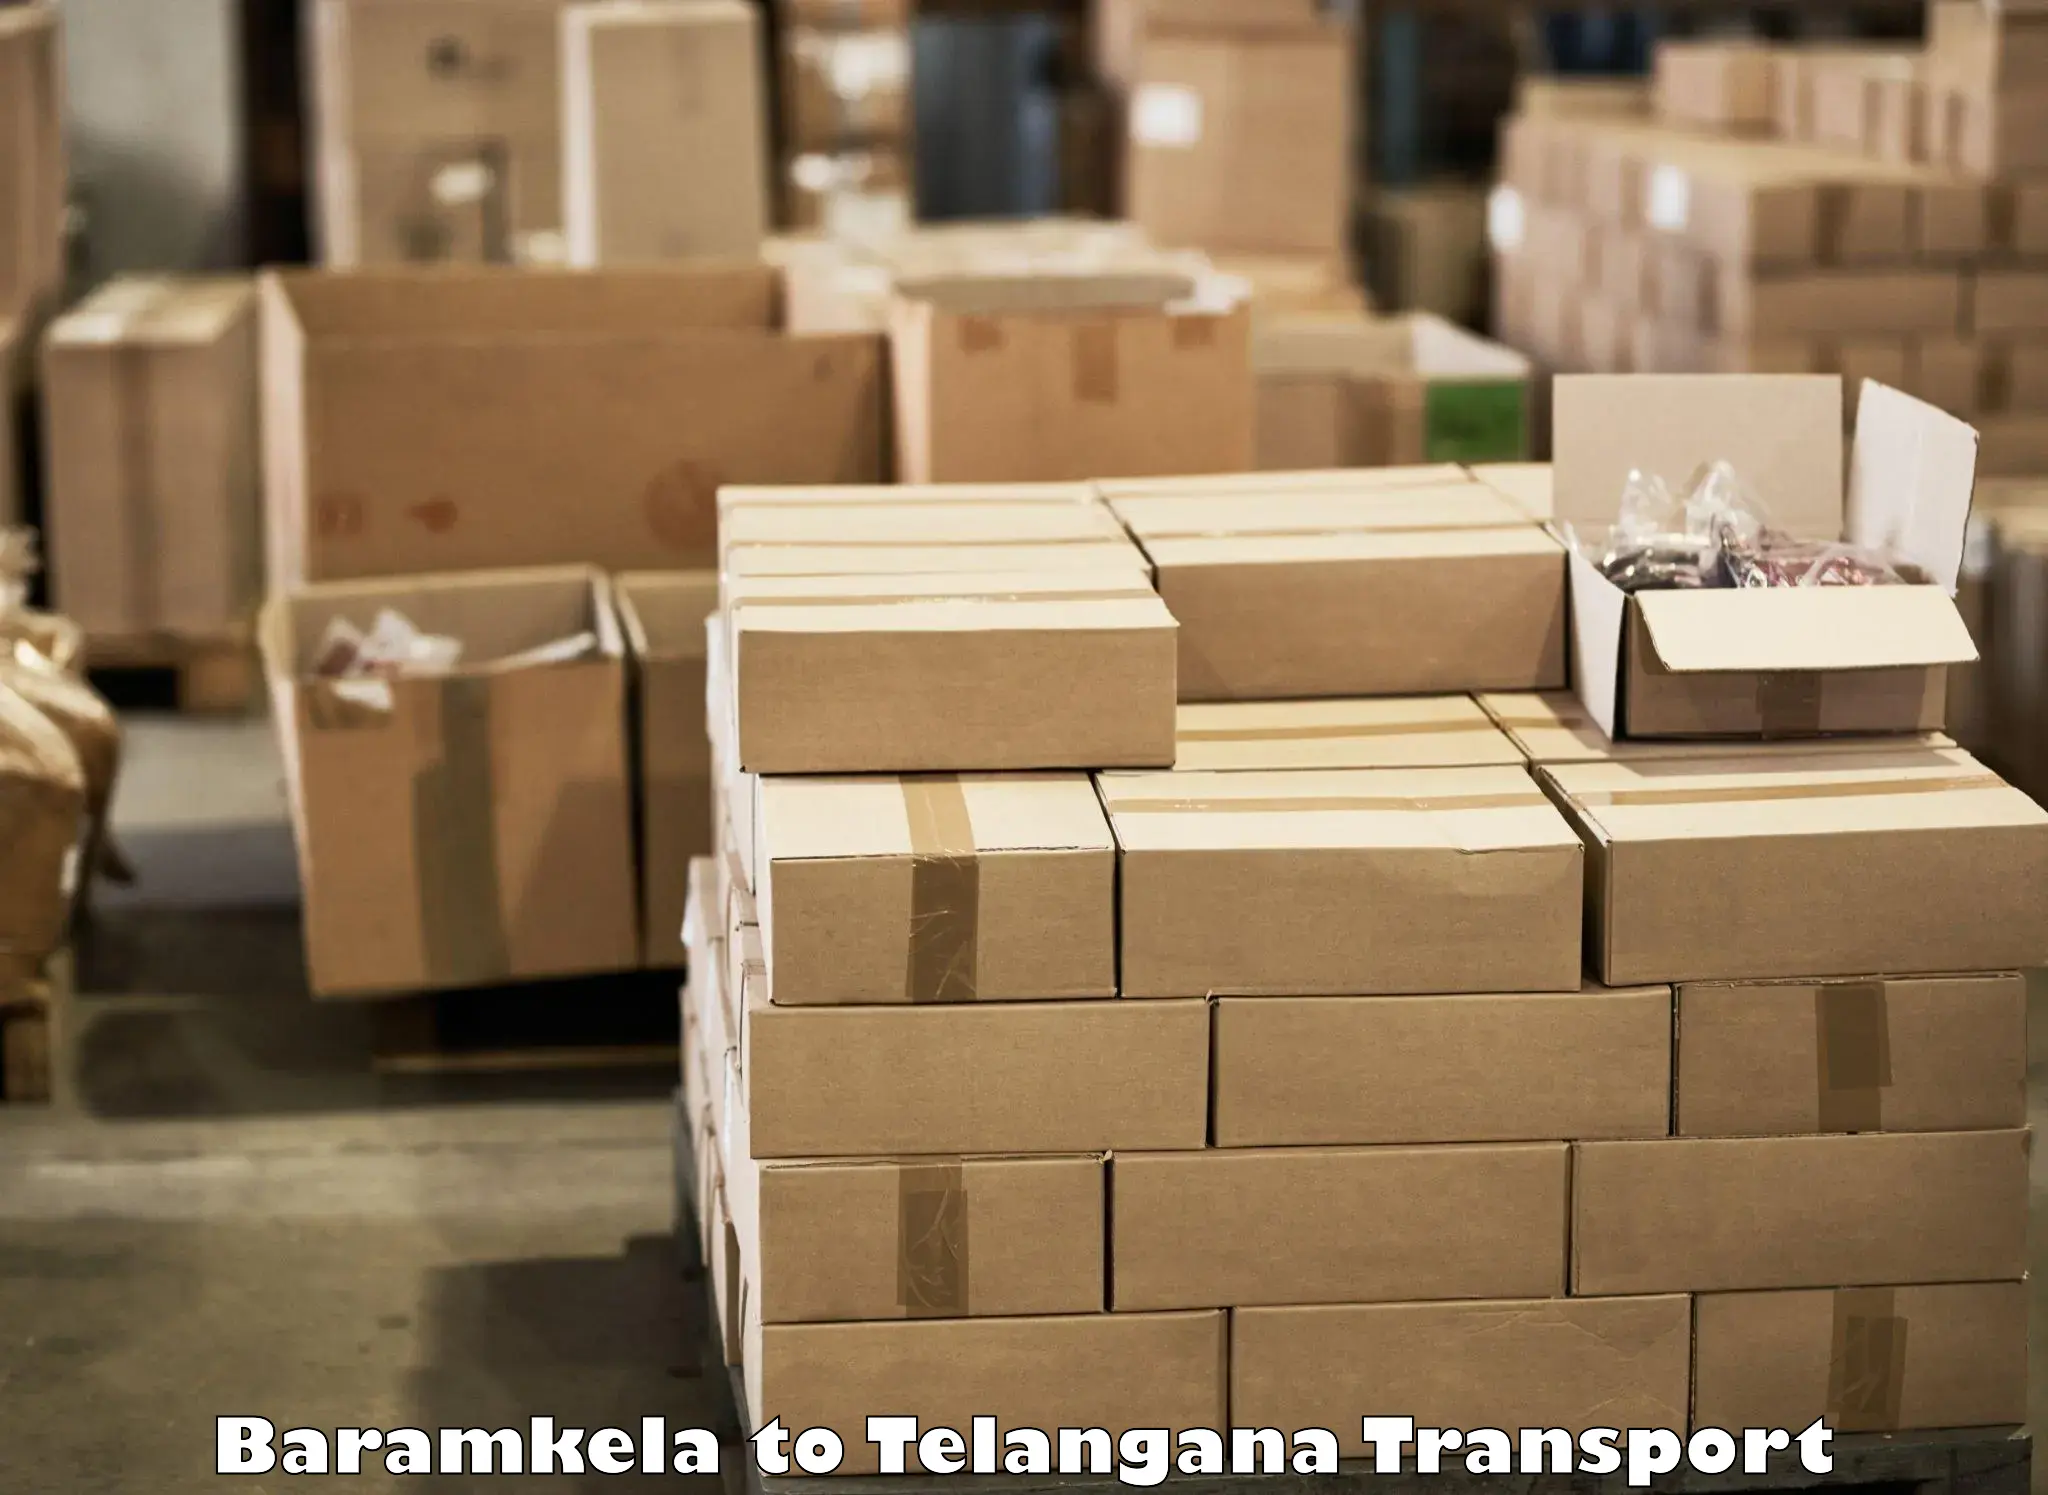 Transport in sharing Baramkela to Haliya